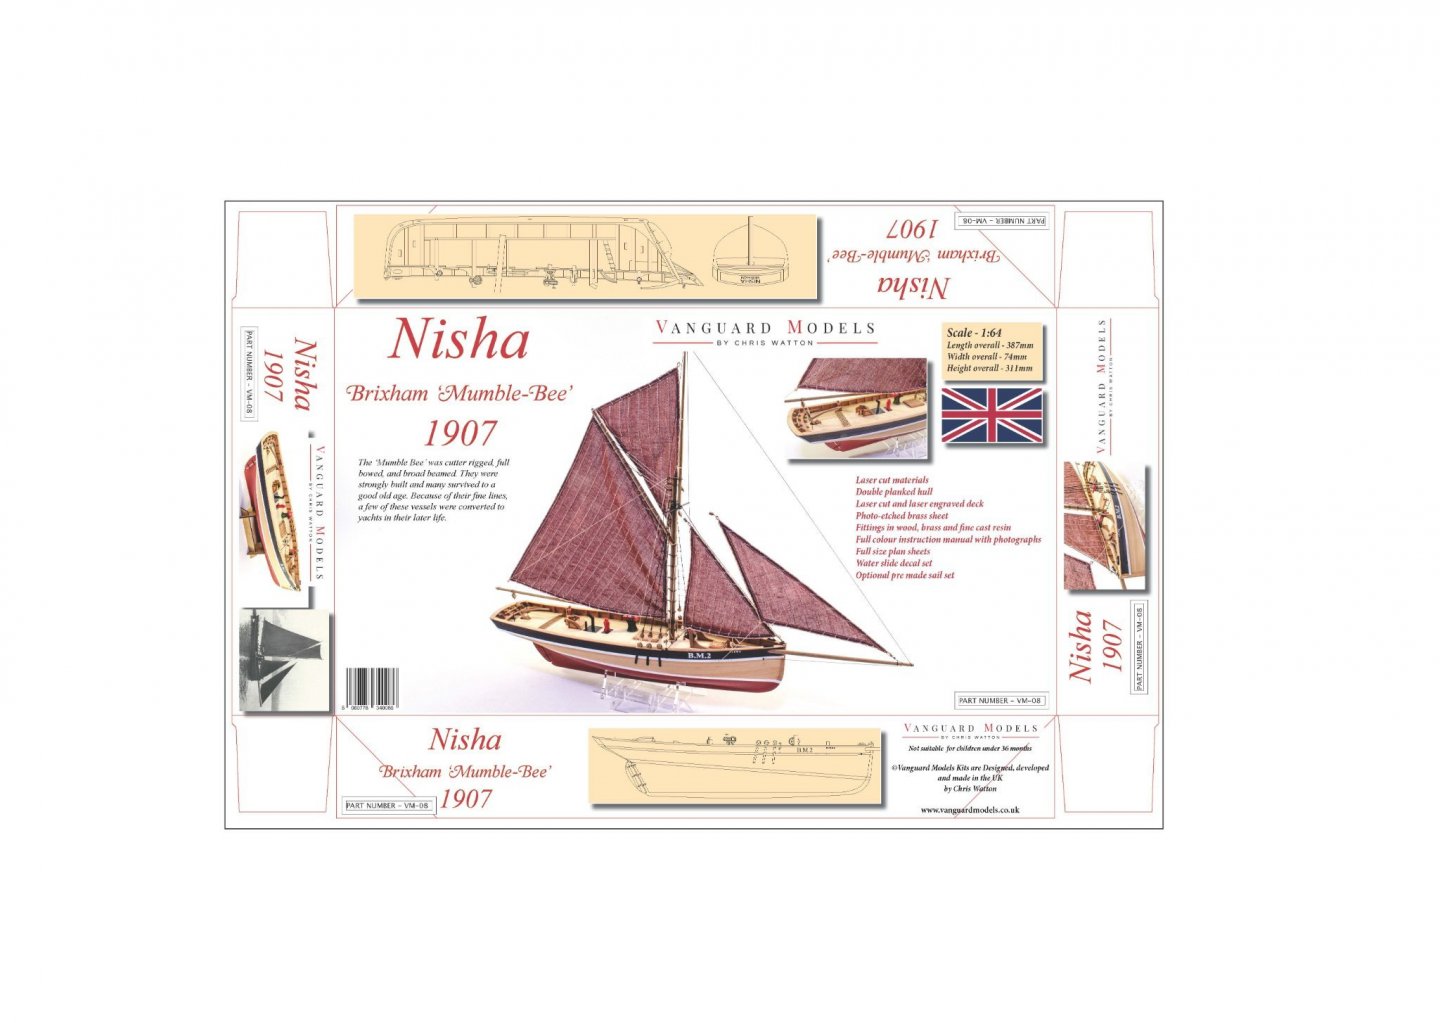 Nisha Box Art.jpg